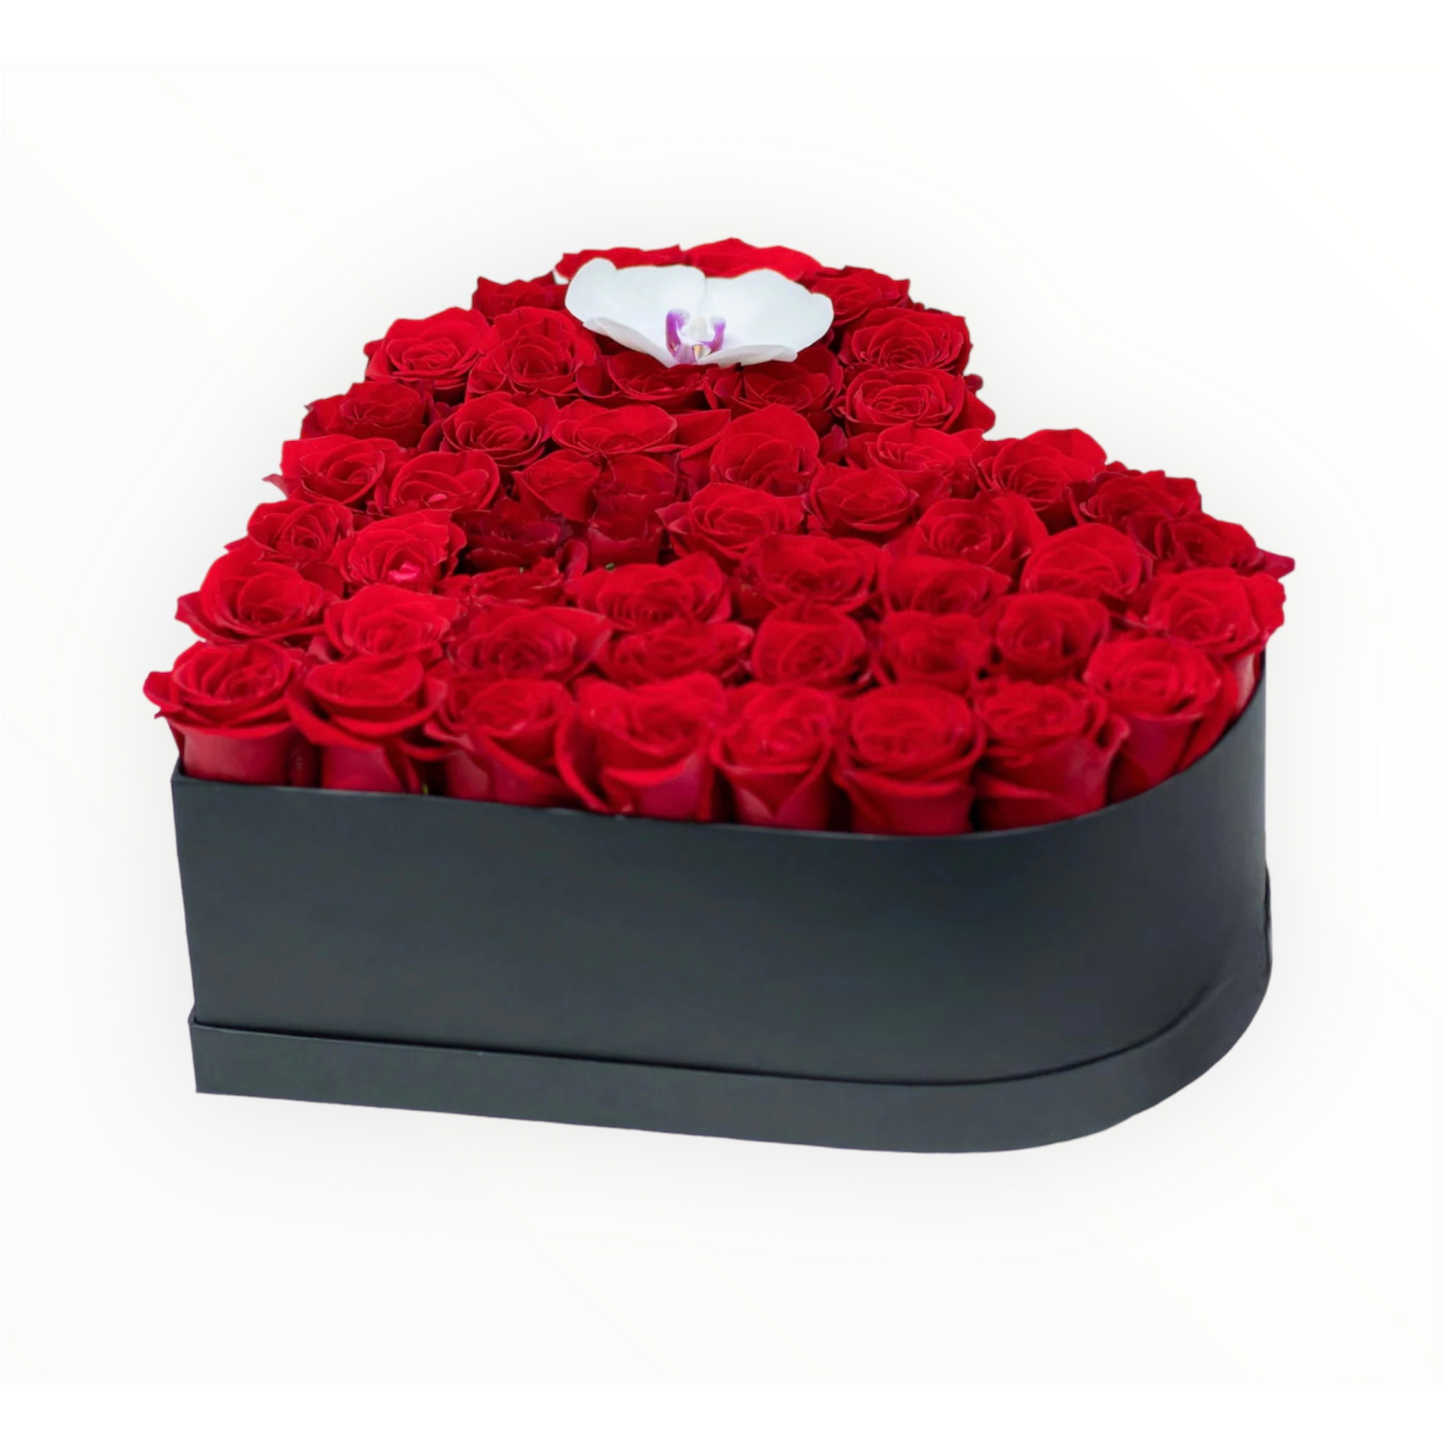 The Heart rose box 3D Single